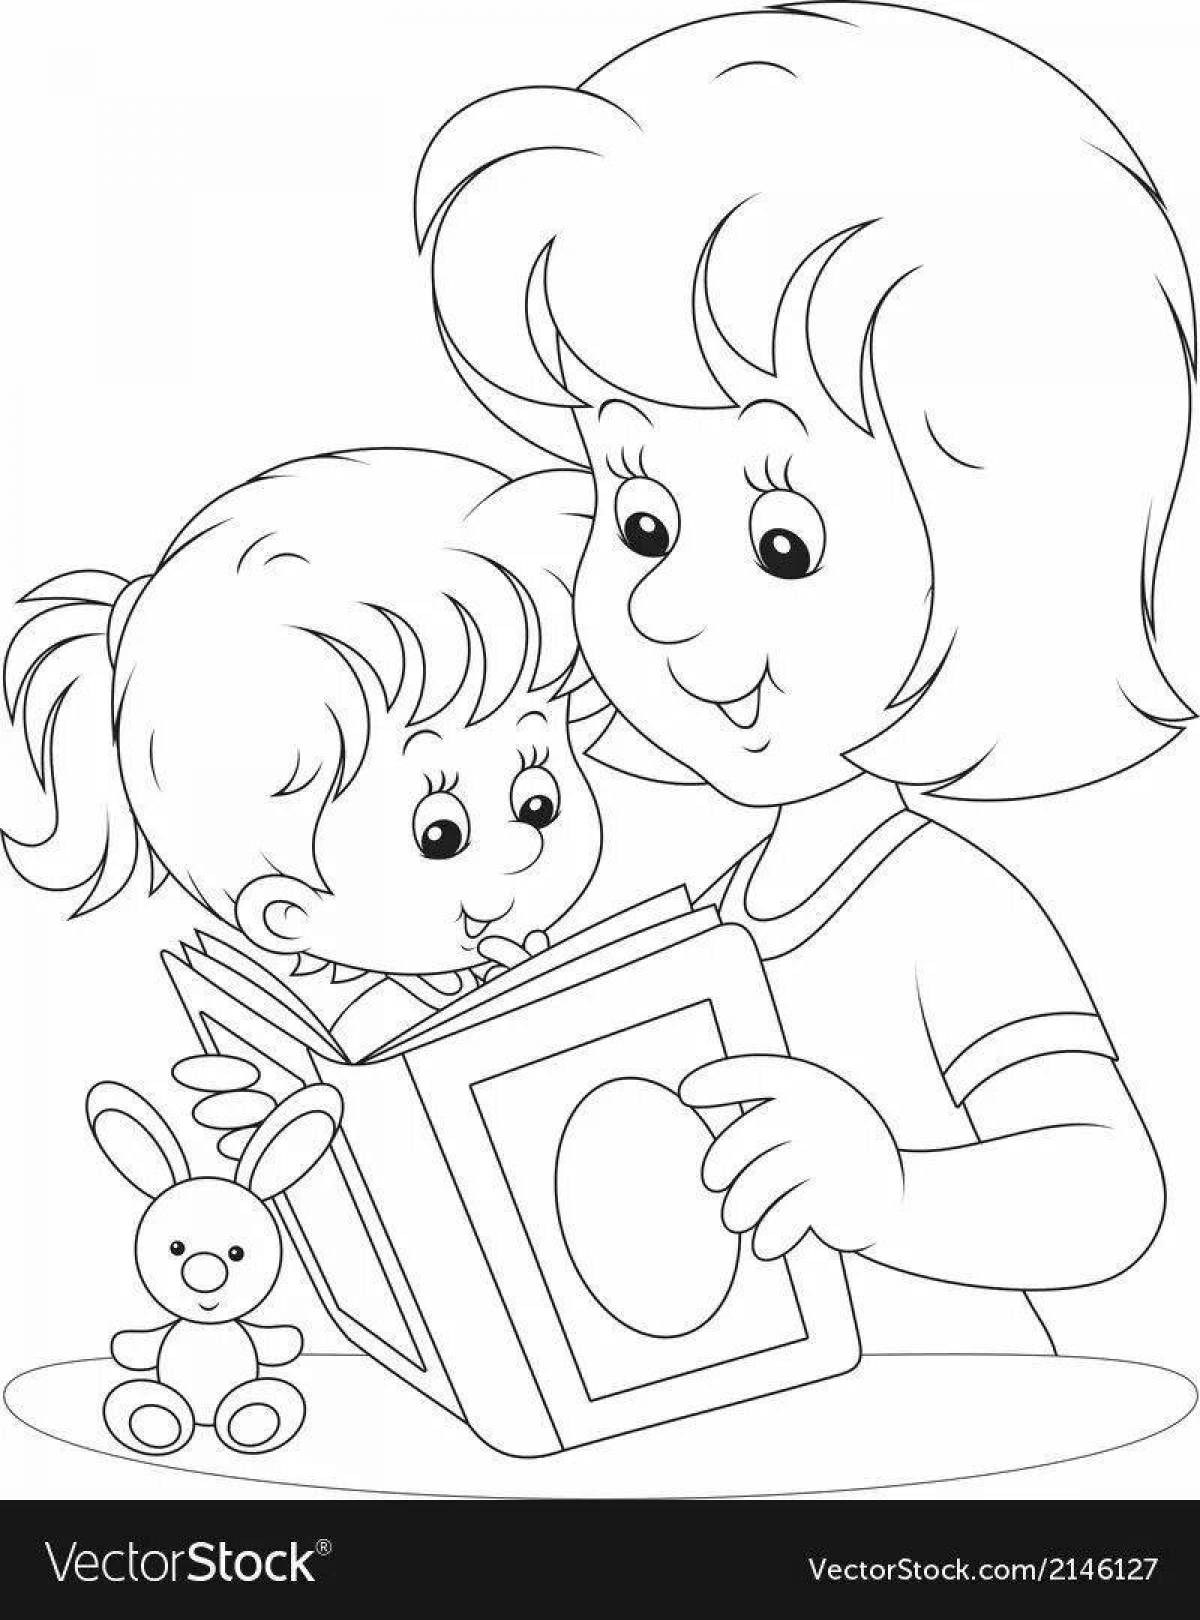 Curious children read books